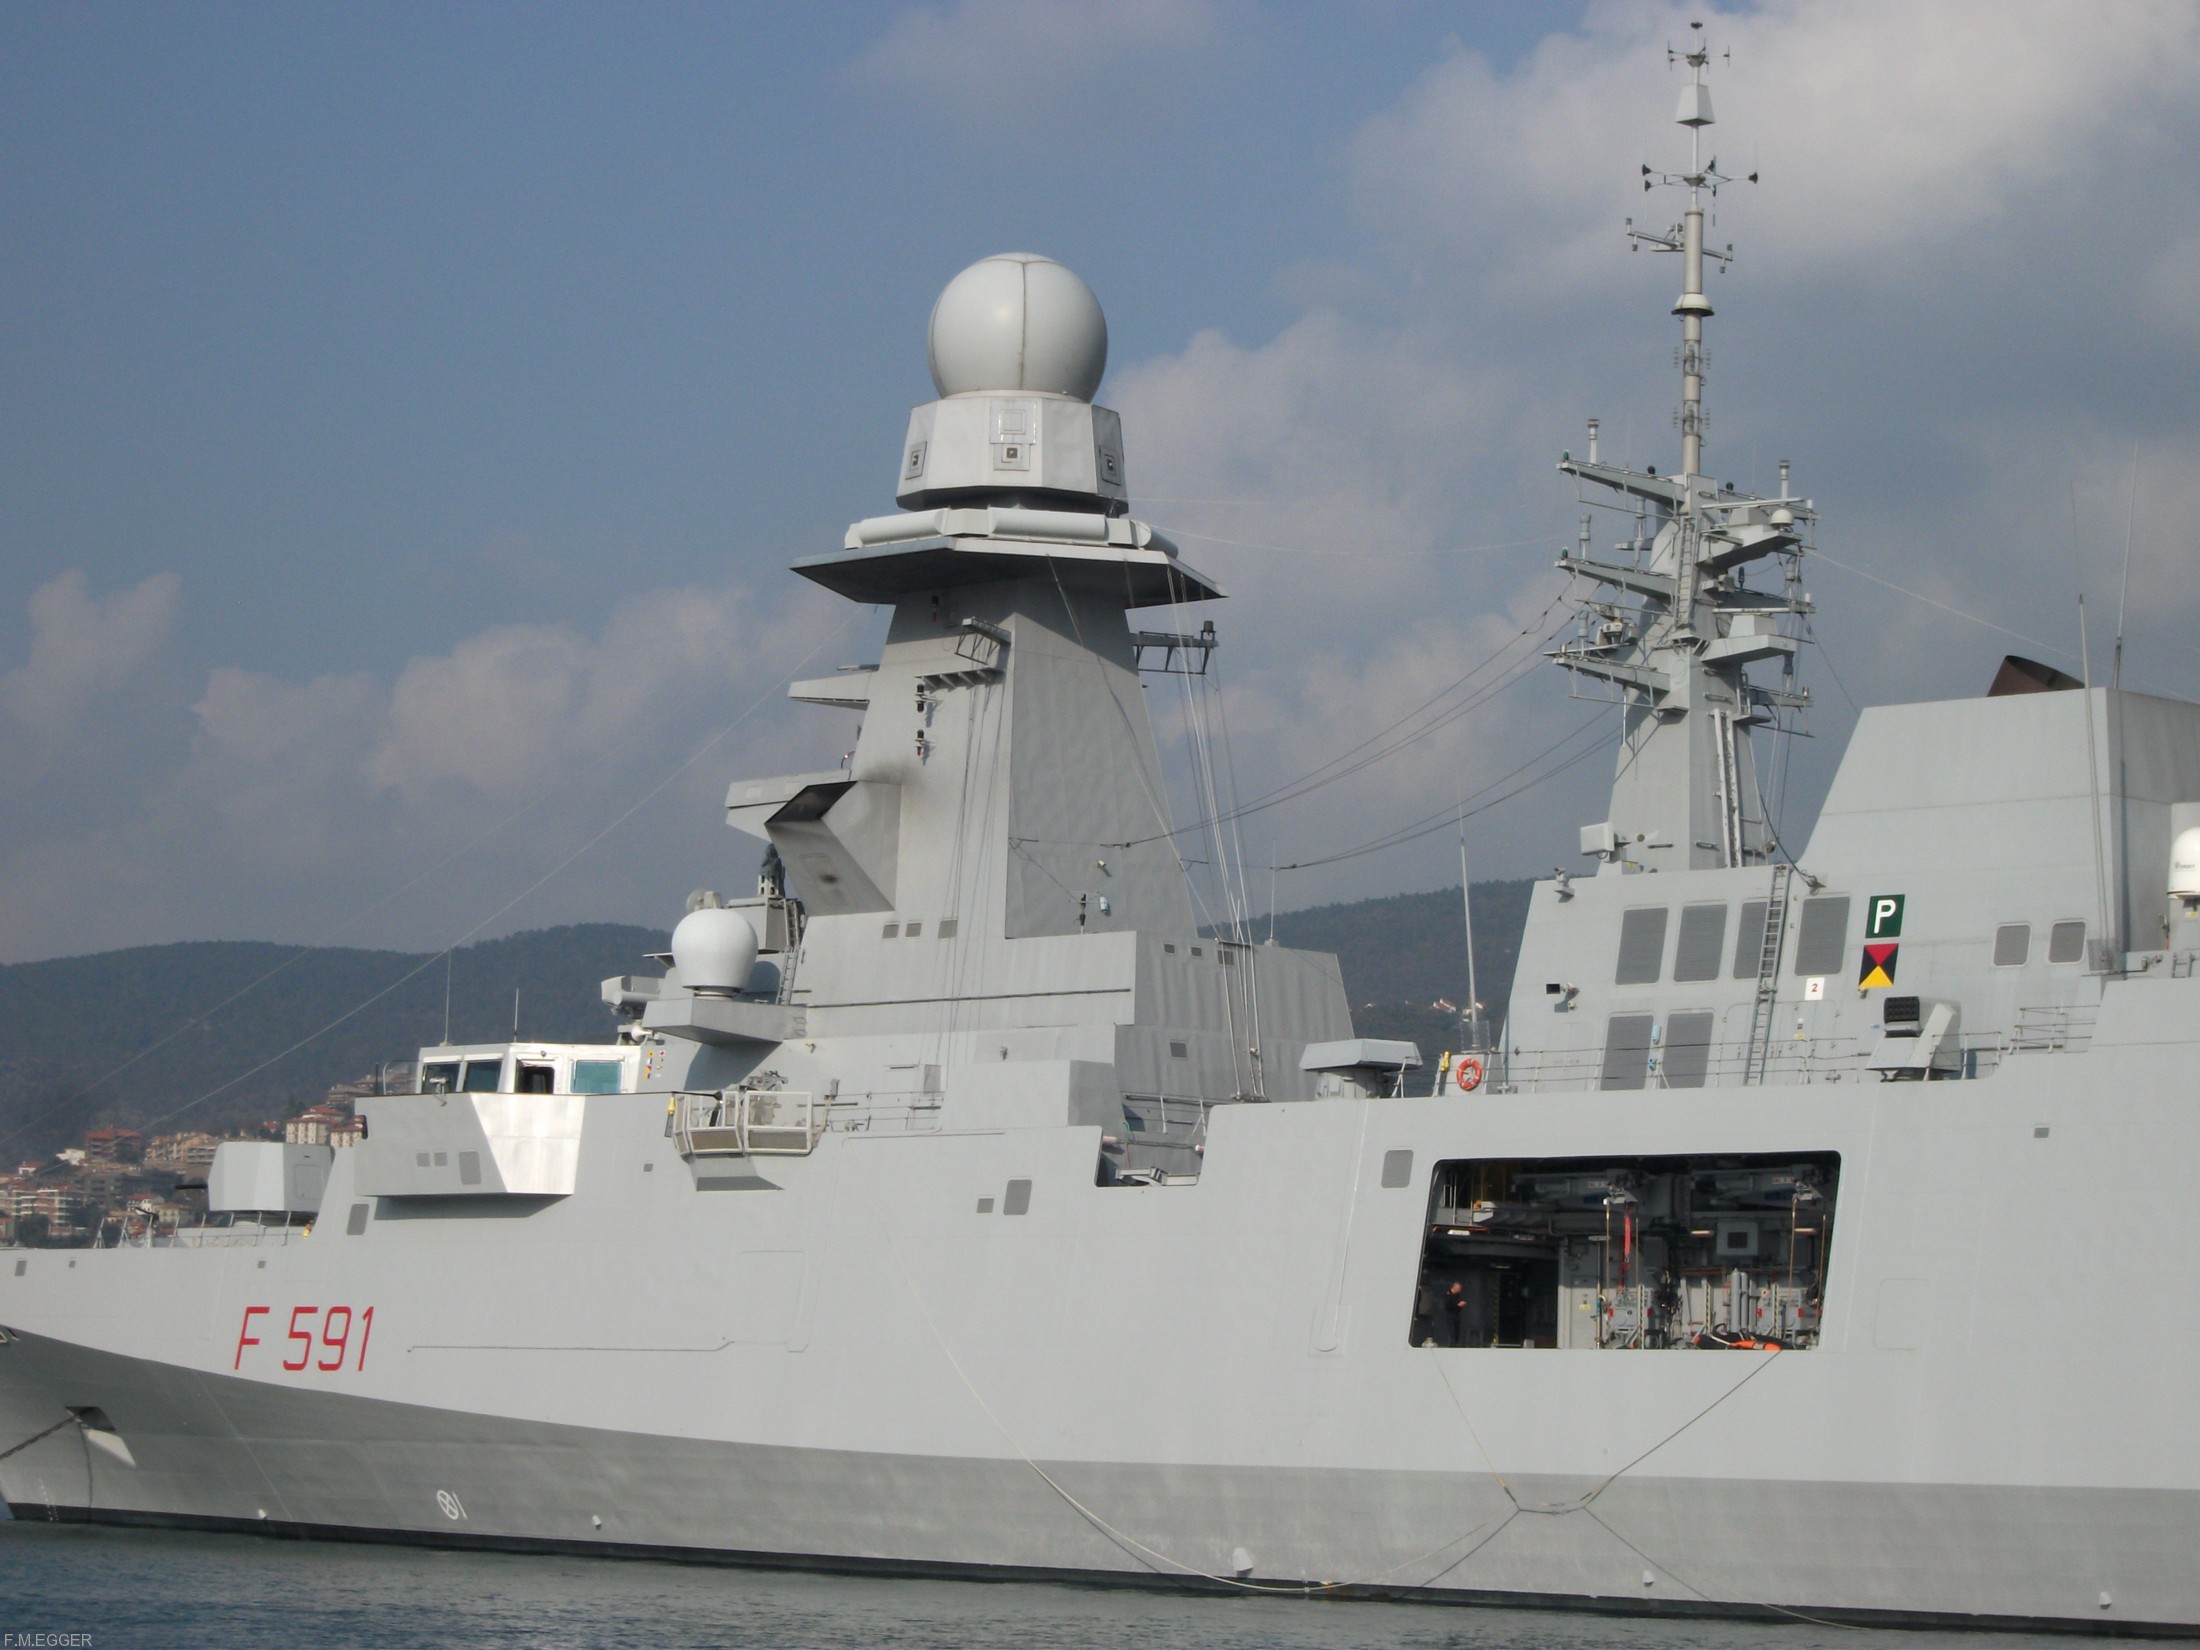 f-591 virginio fasan its nave bergamini fremm class guided missile frigate italian navy marina militare x35 trieste port